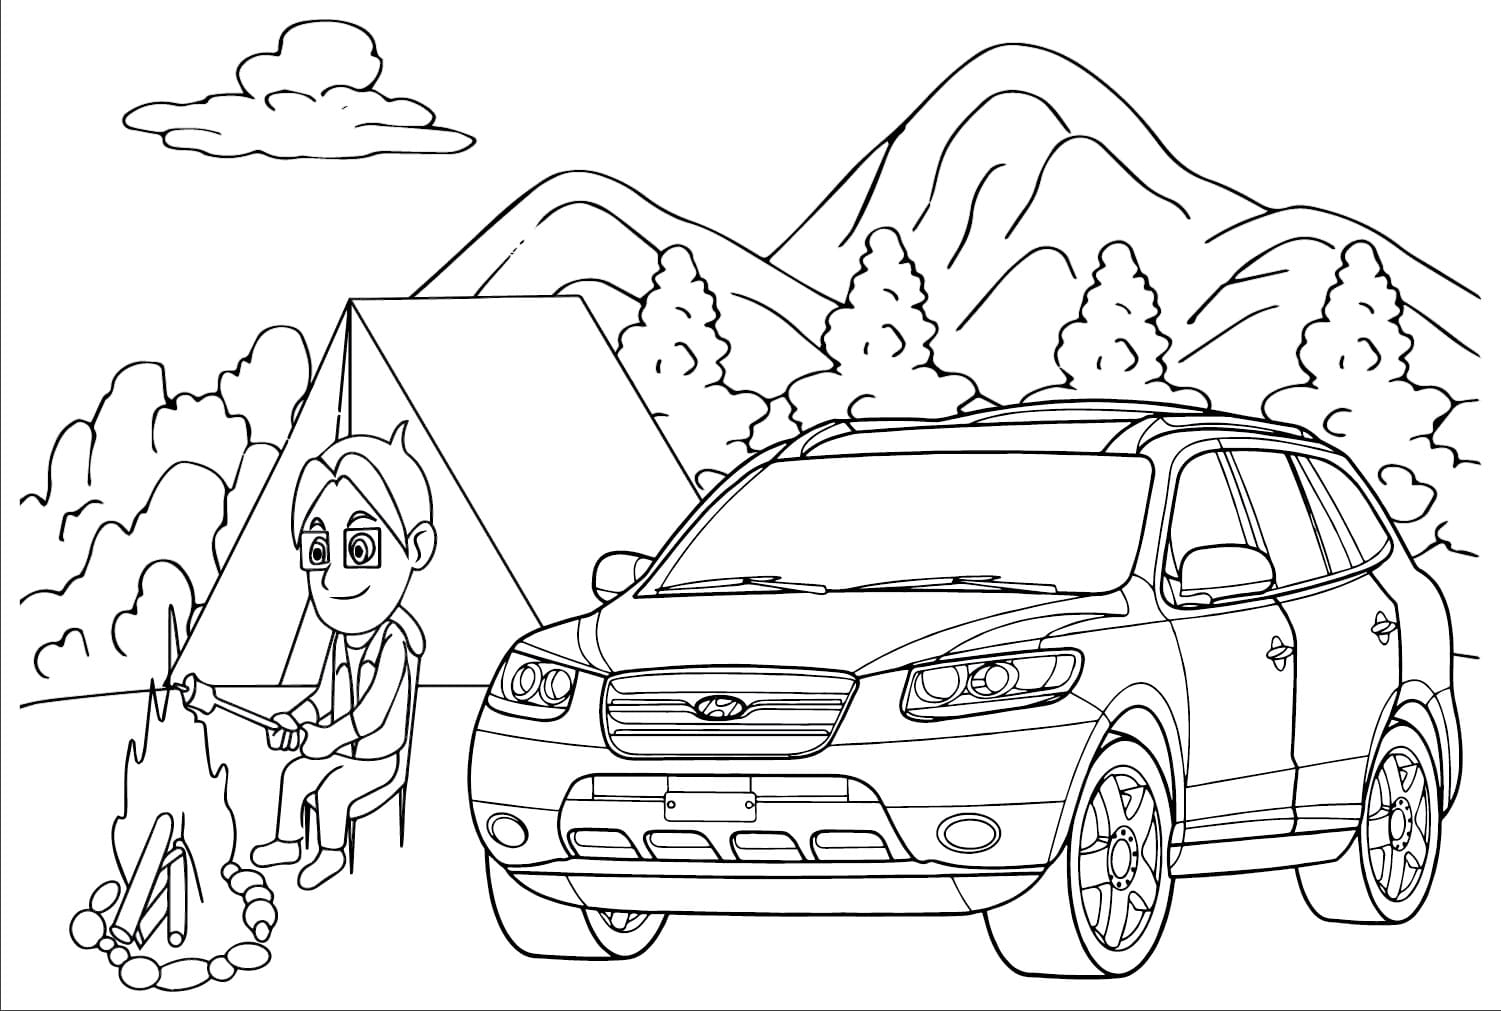 Young Man and Hyundai Car coloring page - Download, Print or Color ...